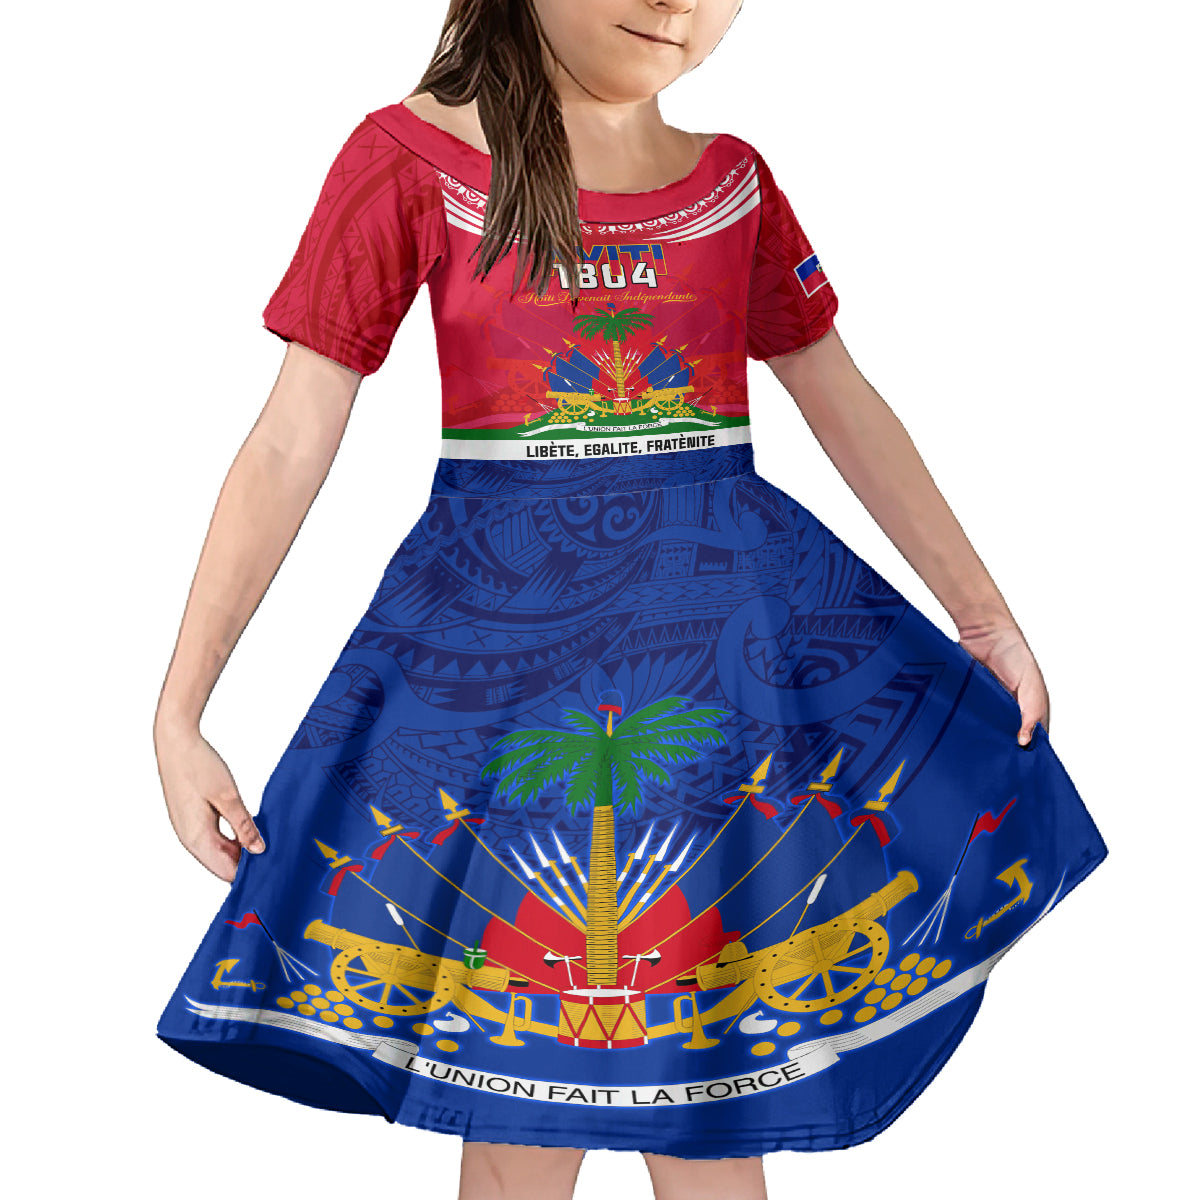 haiti-independence-day-kid-short-sleeve-dress-libete-egalite-fratenite-ayiti-1804-with-polynesian-pattern